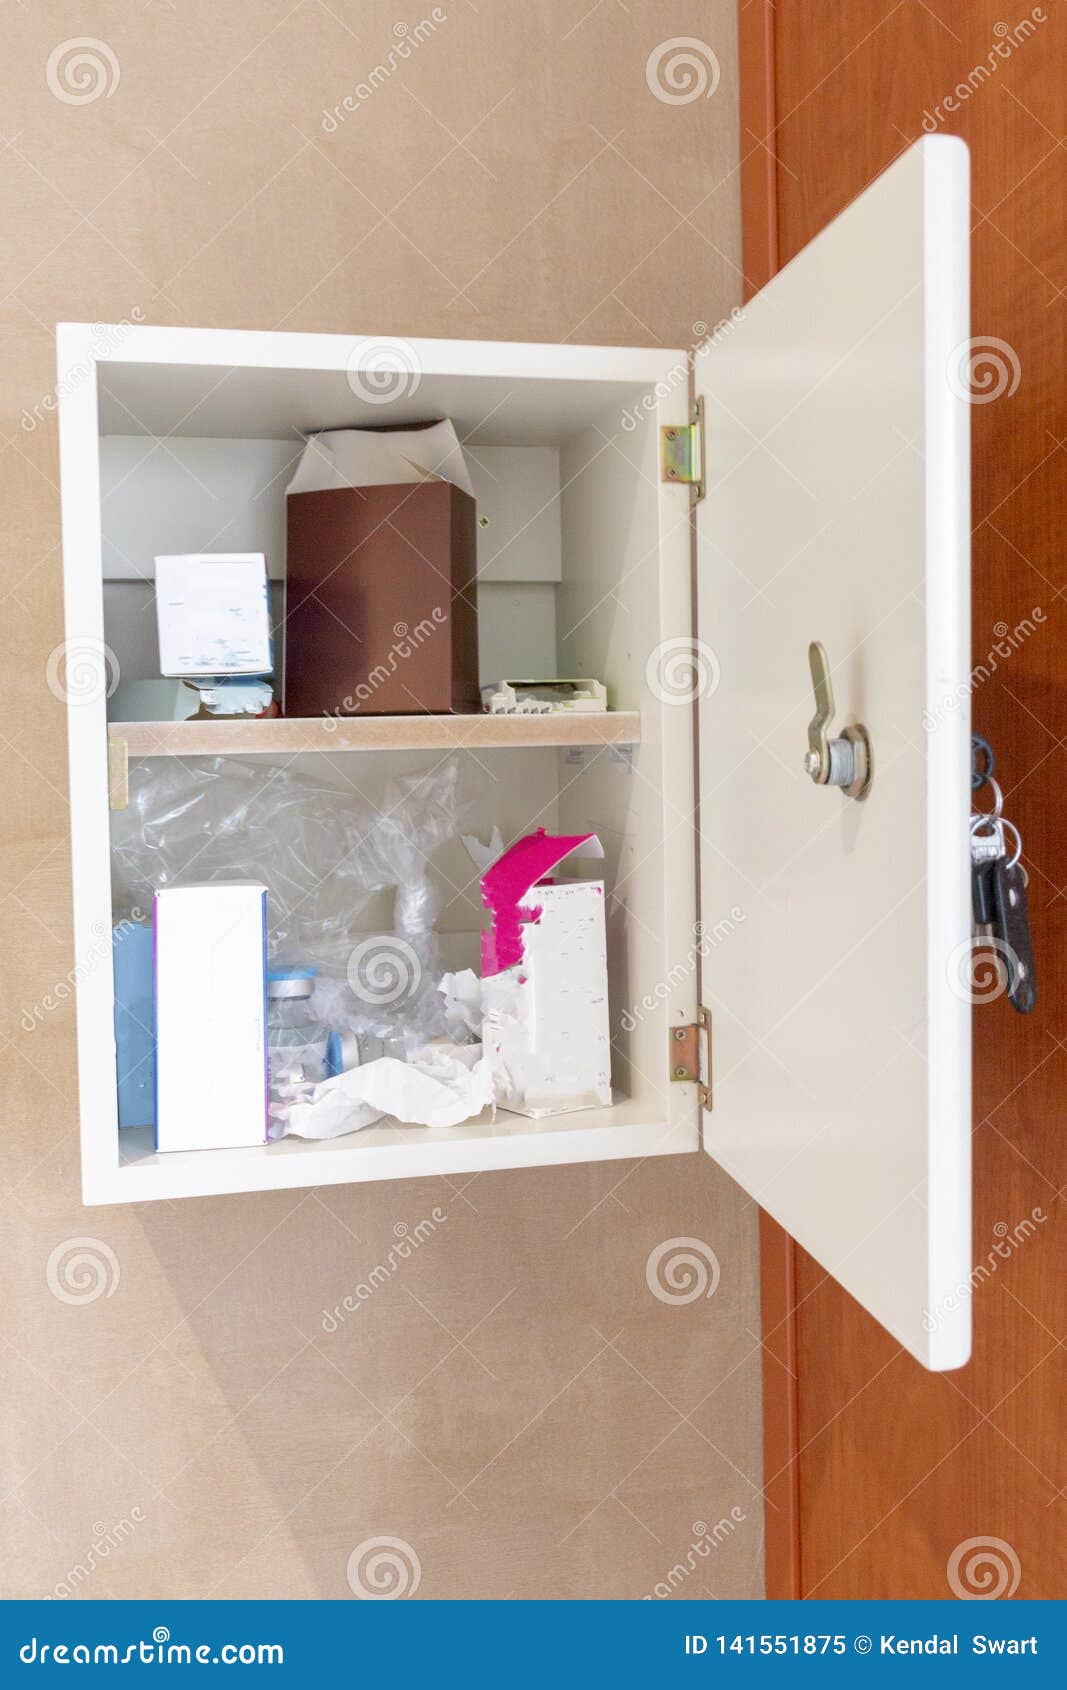 A Medicine Cabinet Stock Image Image Of Inside Plasters 141551875